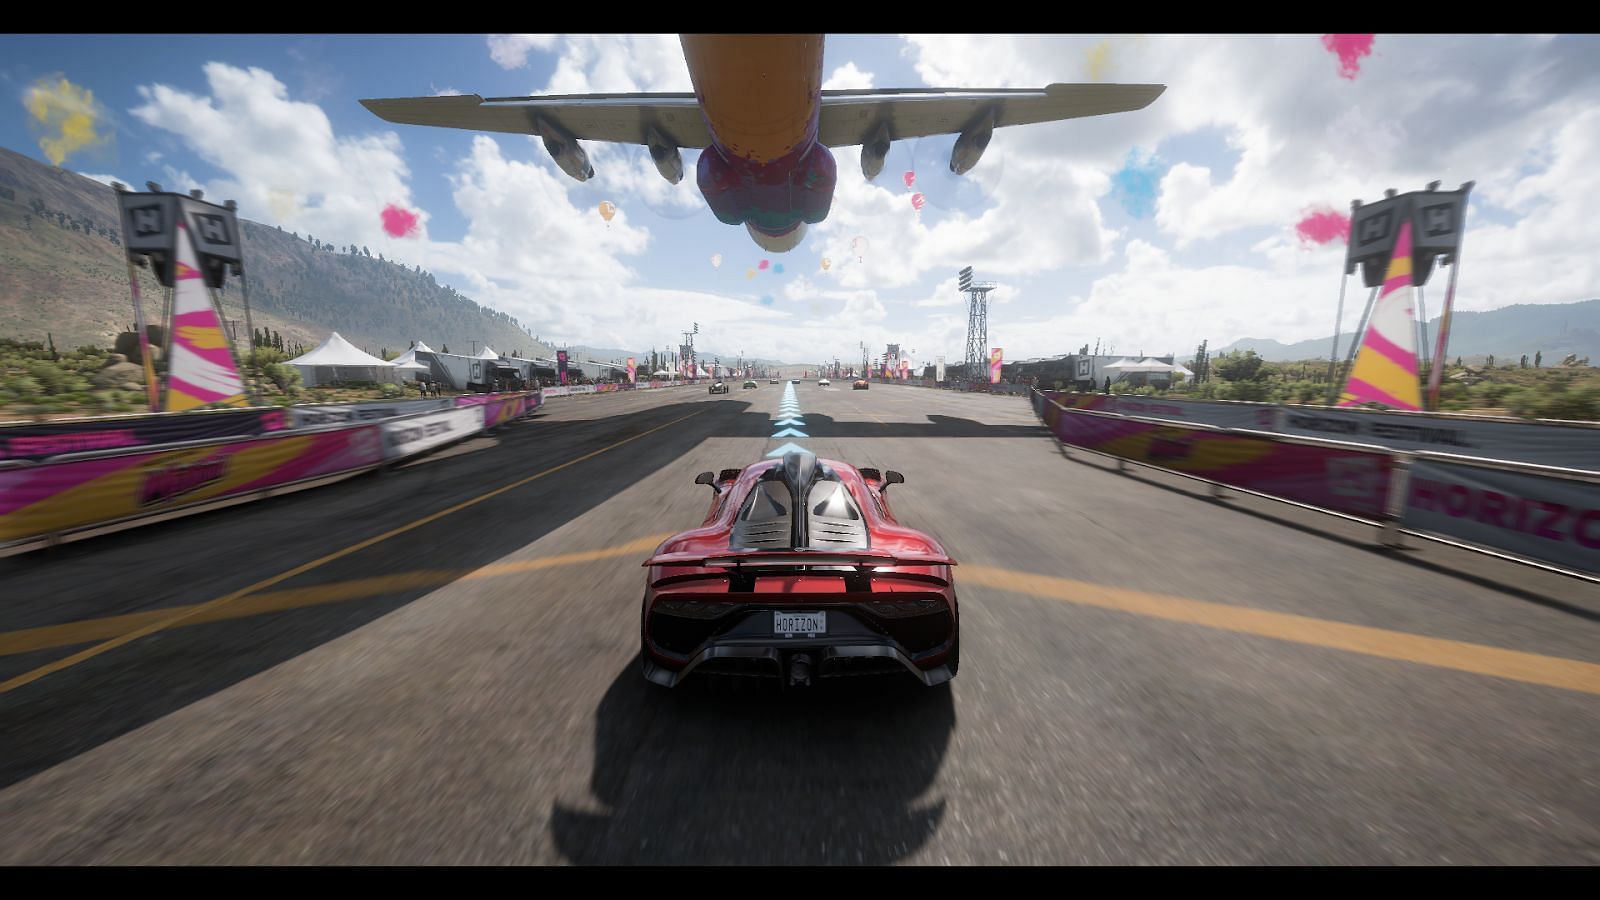 The main festival starting ceremony (Screengrab from Forza Horizon 5)